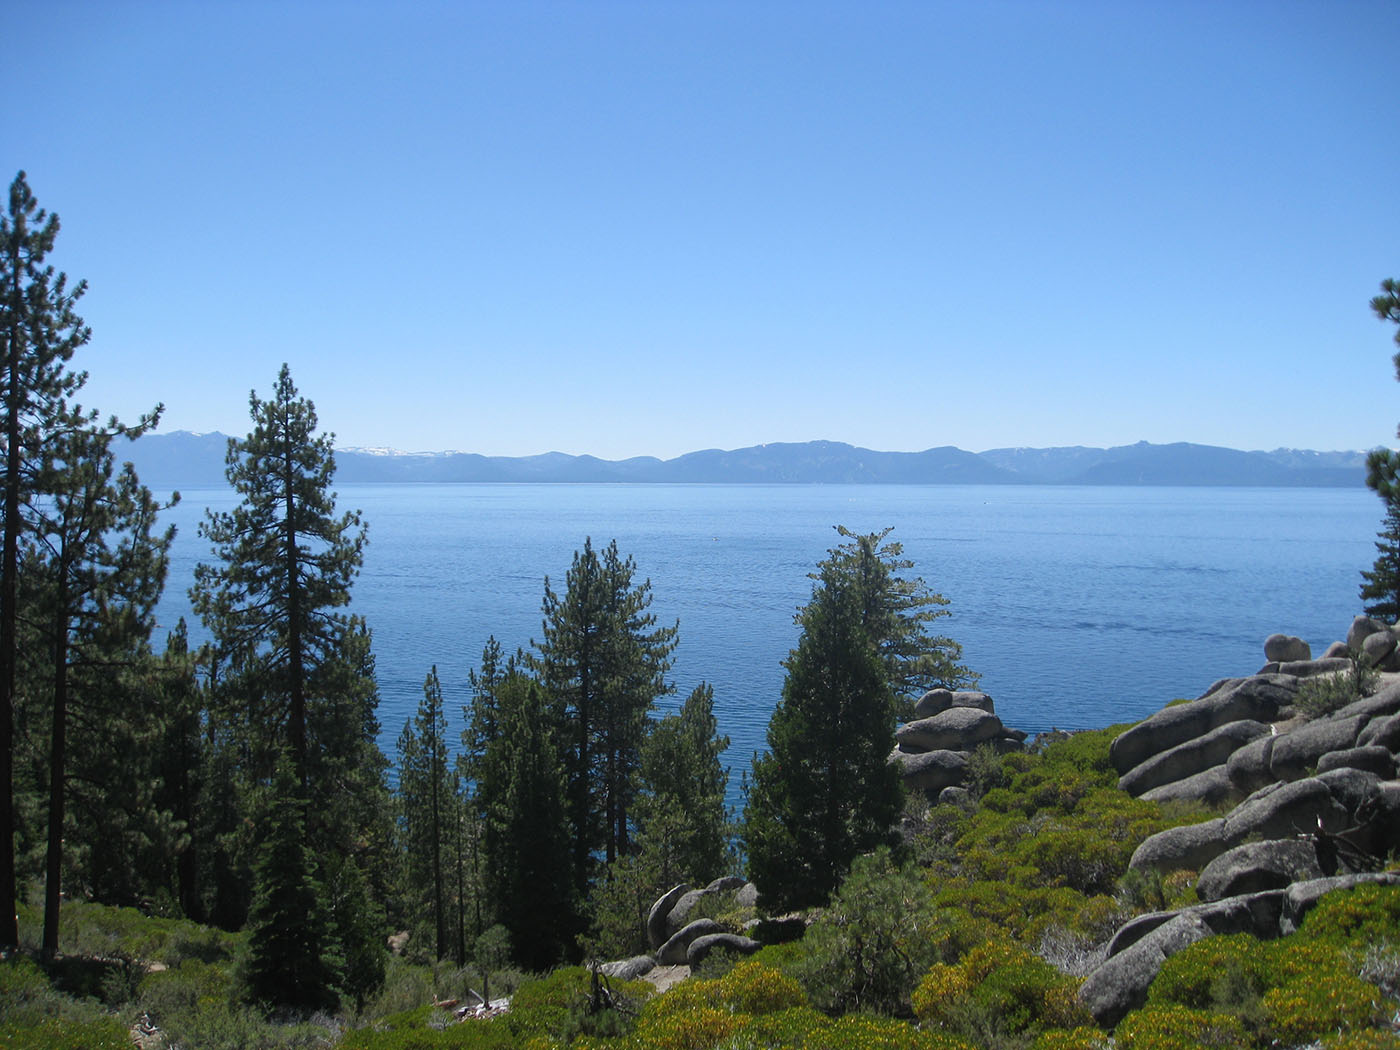 Tahoe National Forest - Wetlands Volunteer Icon